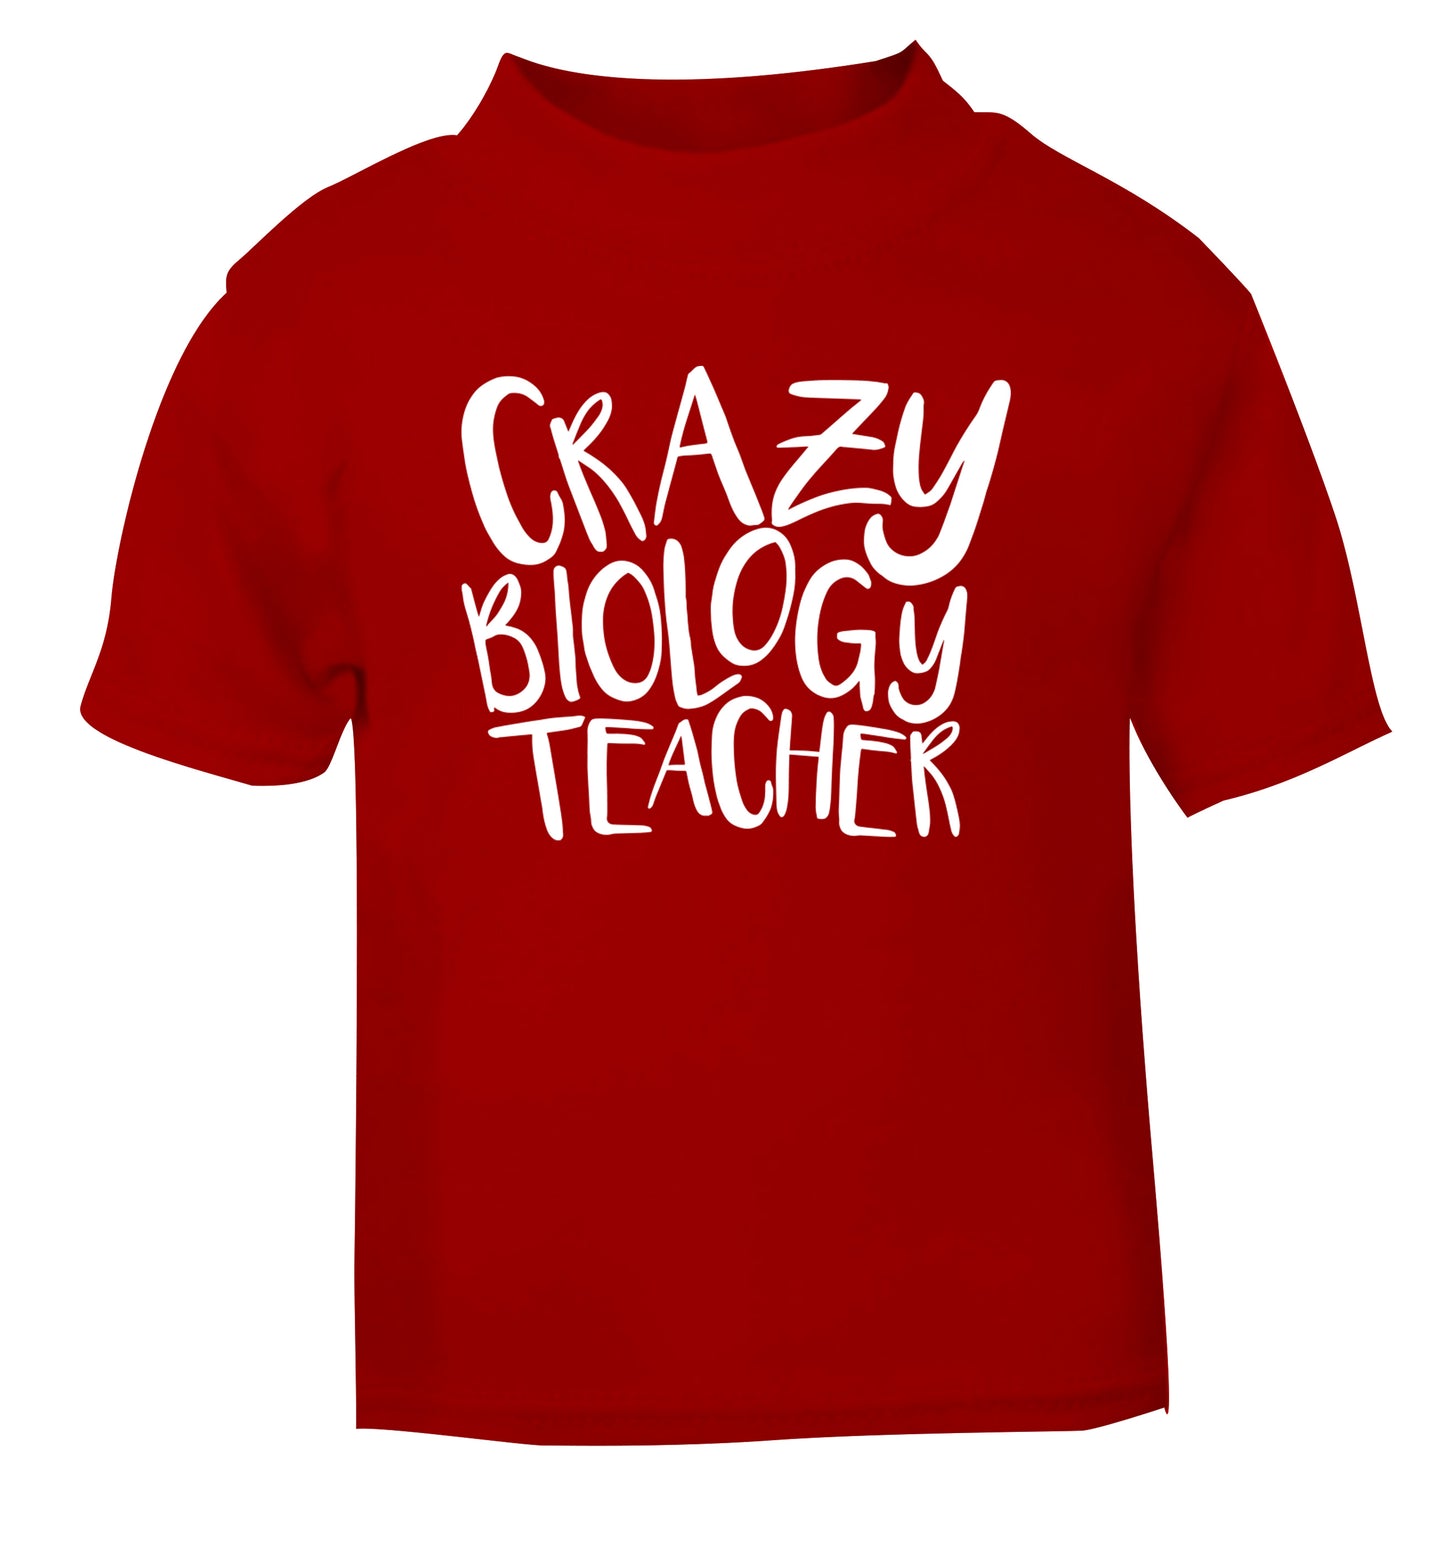 Crazy biology teacher red Baby Toddler Tshirt 2 Years